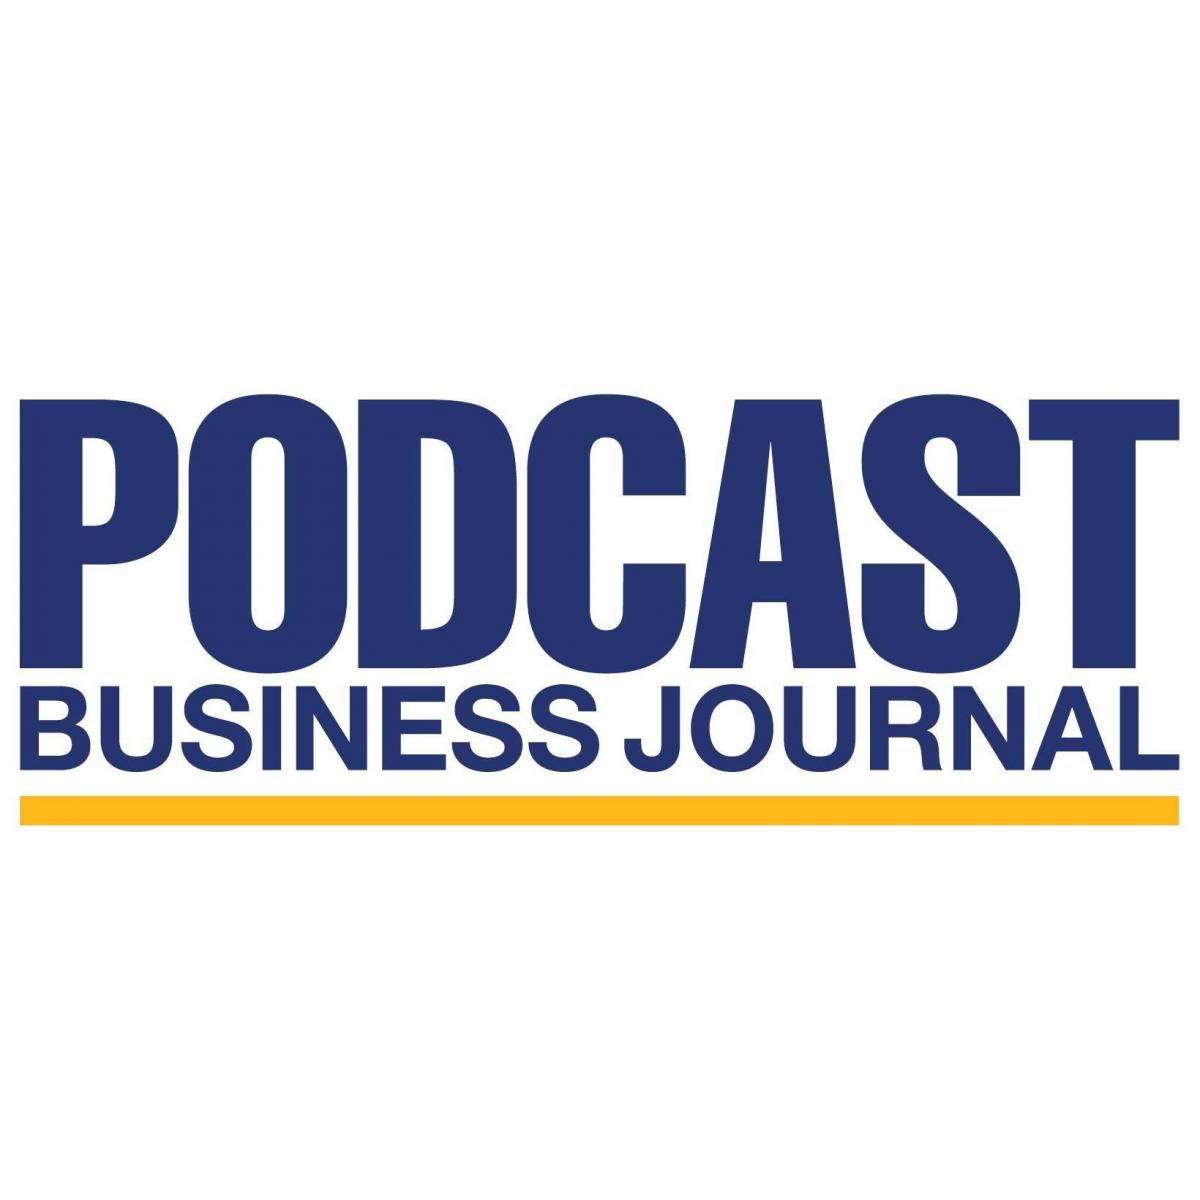 Podcast Business Journal logo